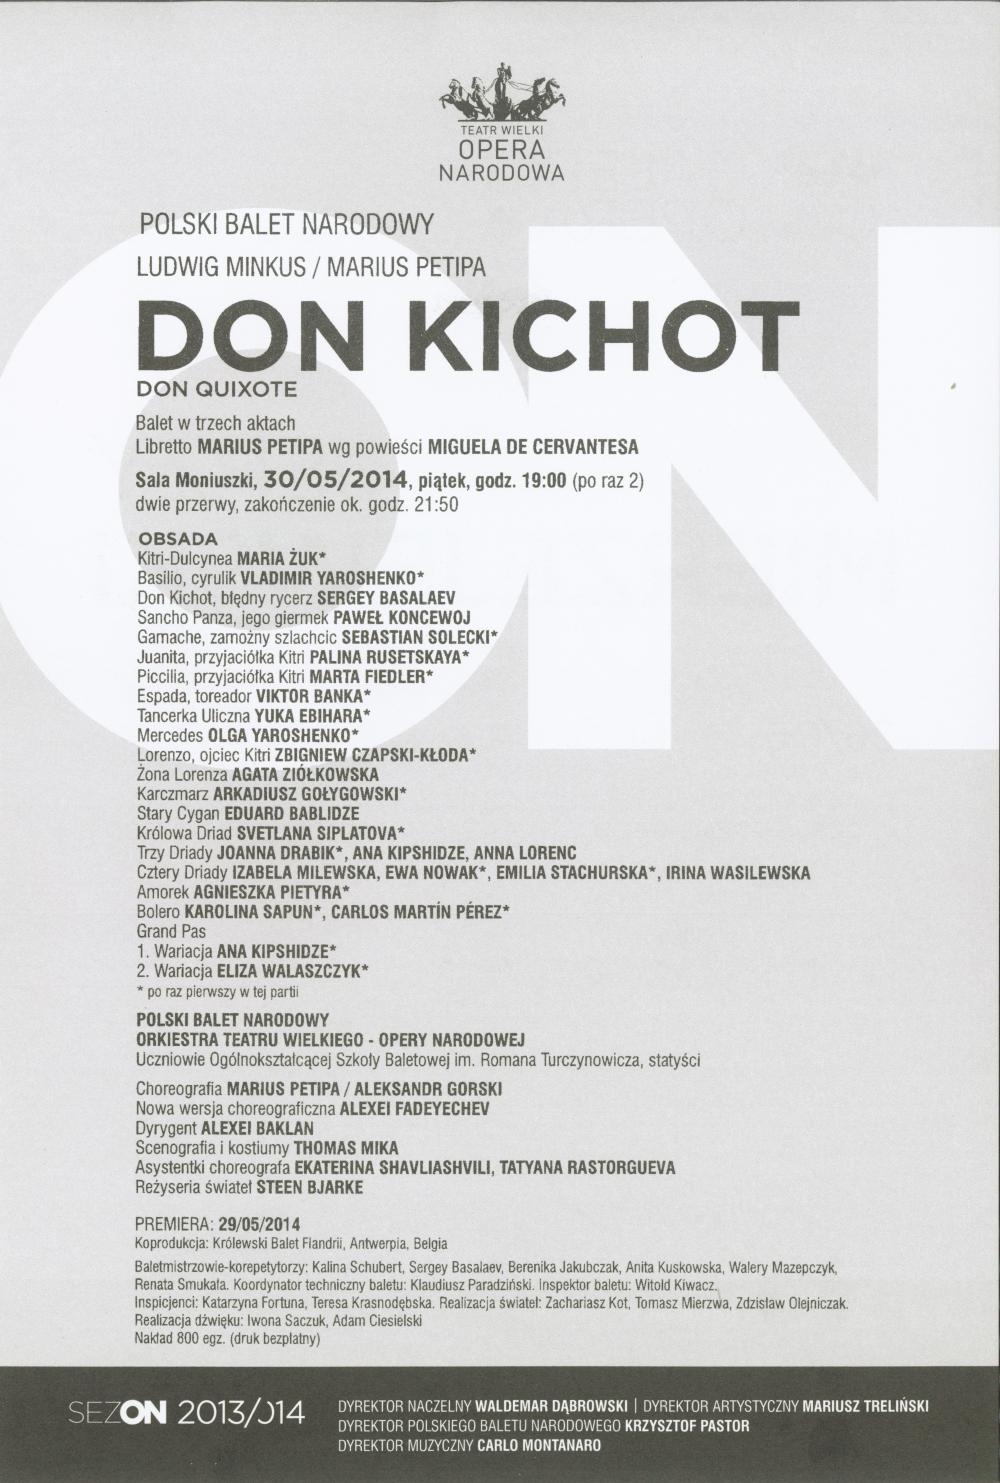 Wkładka obsadowa "Don Kichot" Ludwig Minkus / Marius Petipa, 2014-05-30